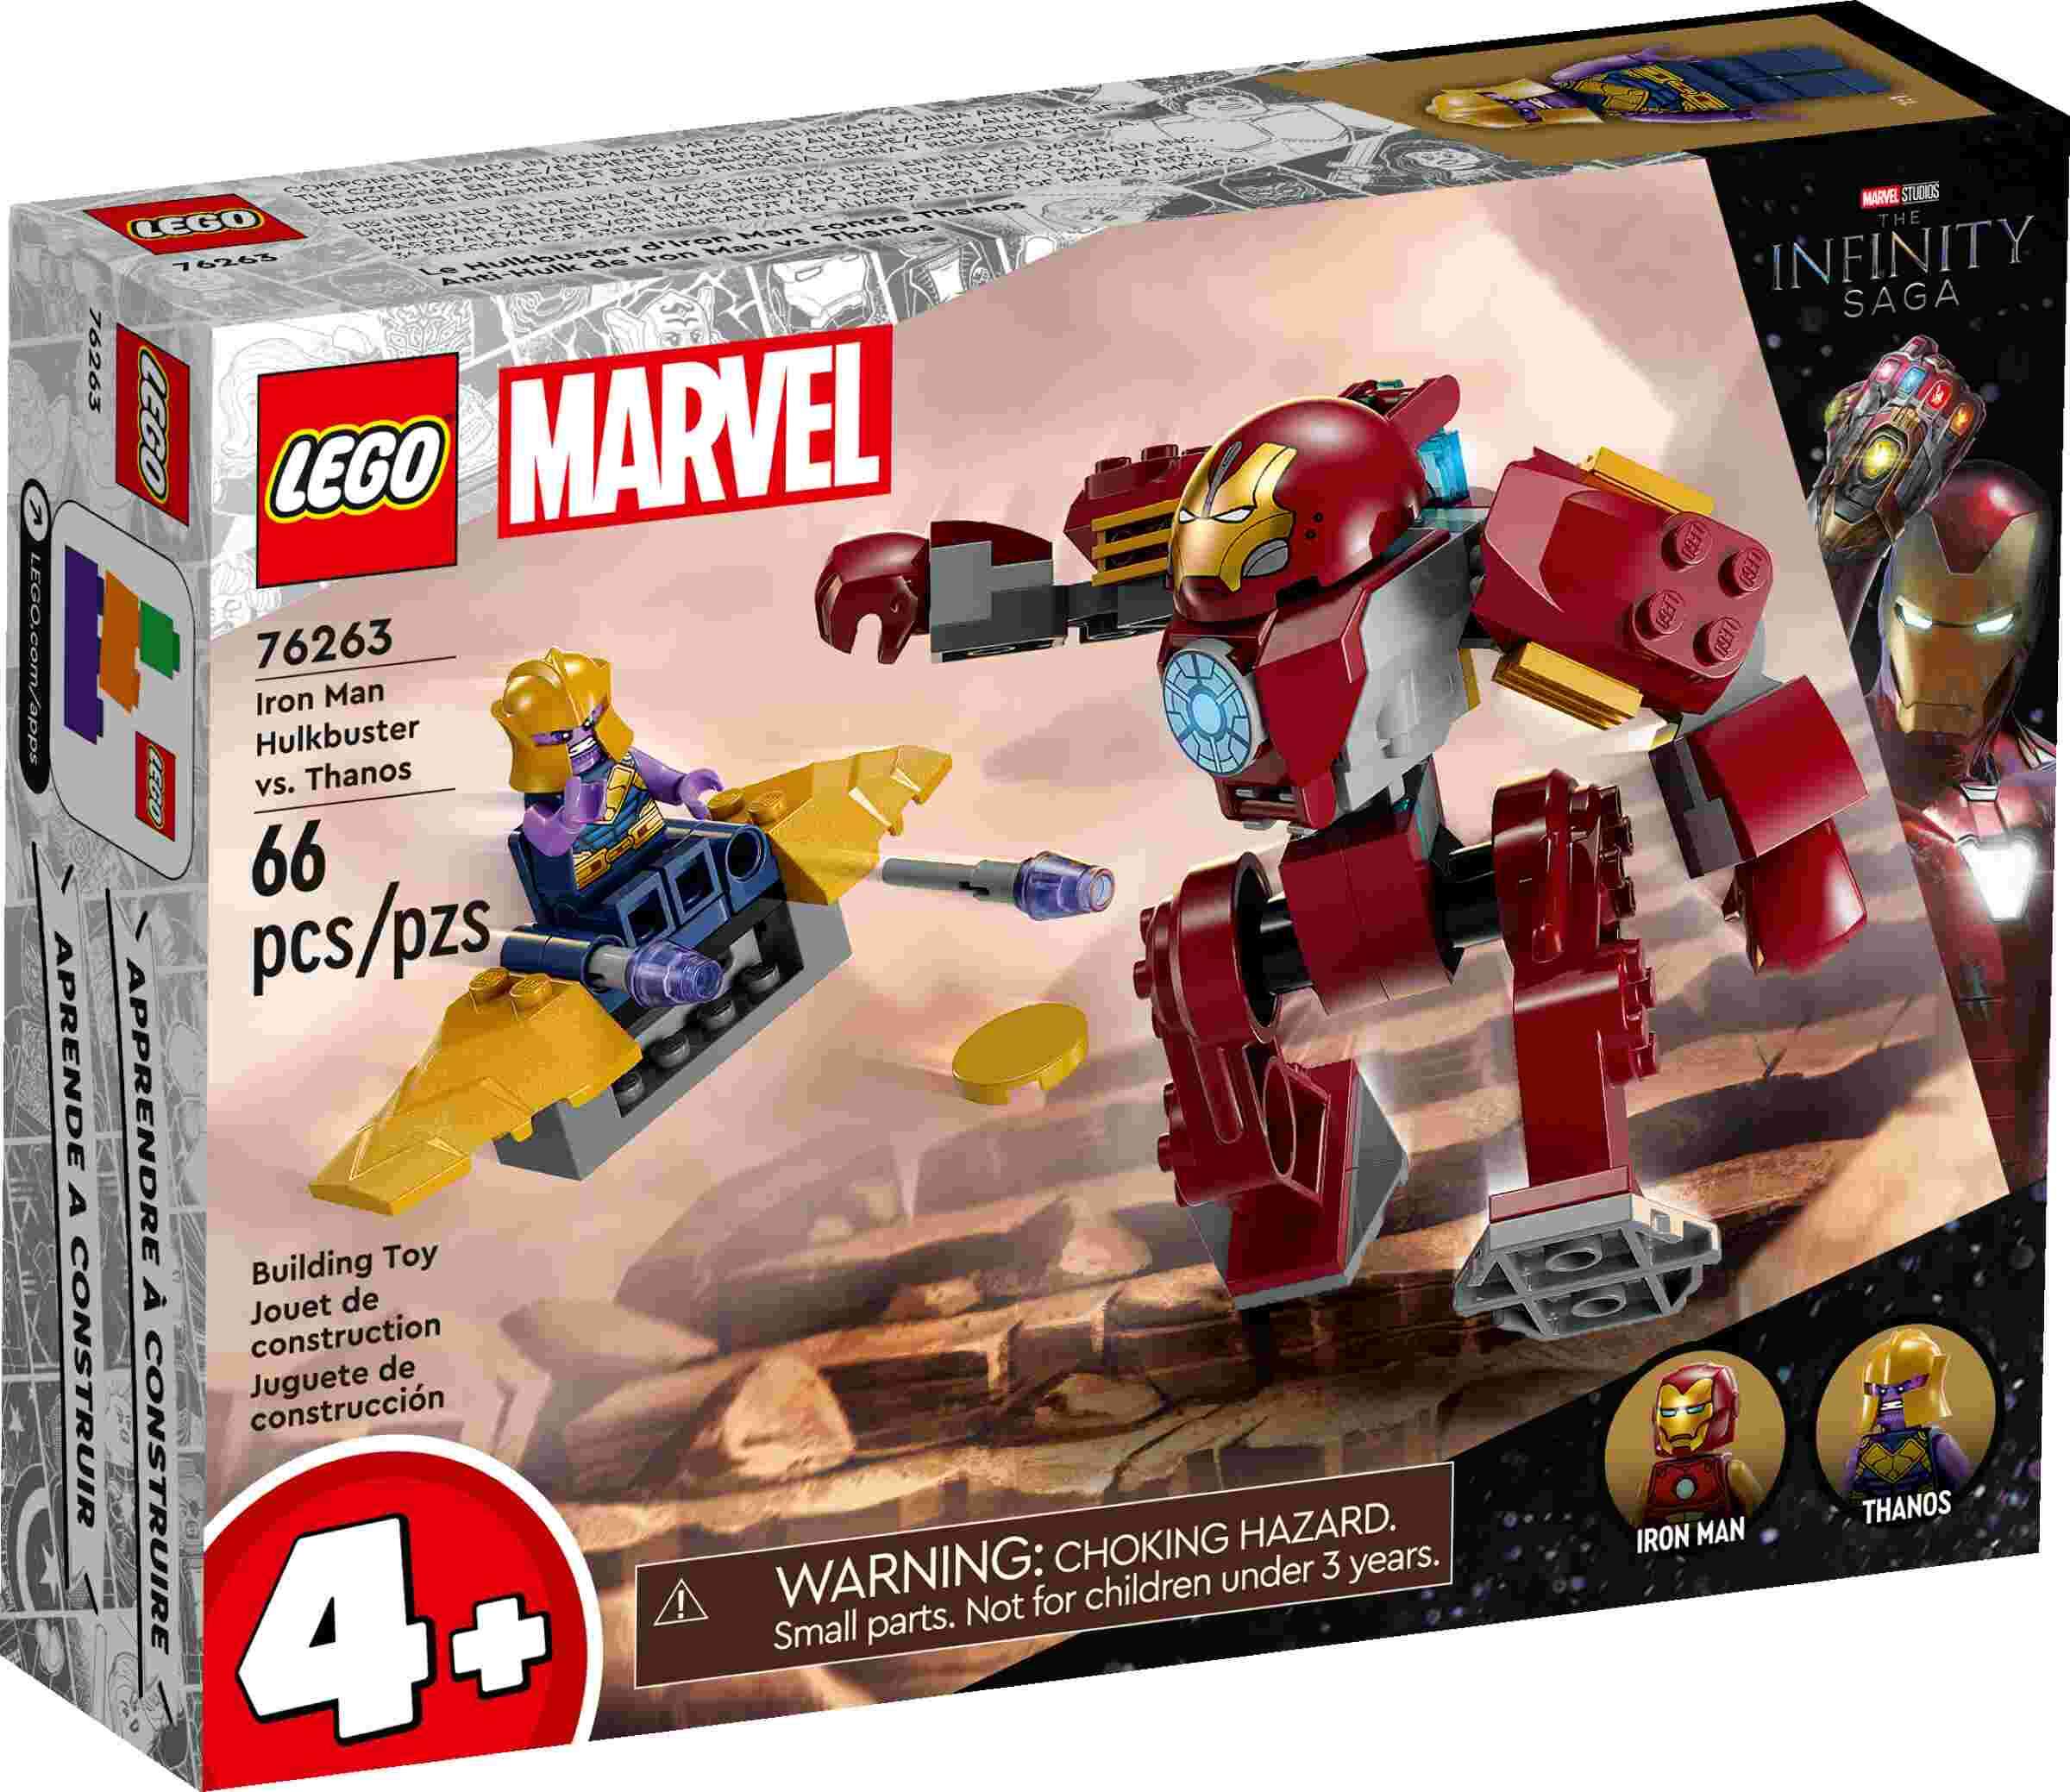 LEGO 76263 Marvel Super Heroes Iron Man Hulkbuster vs. Thanos